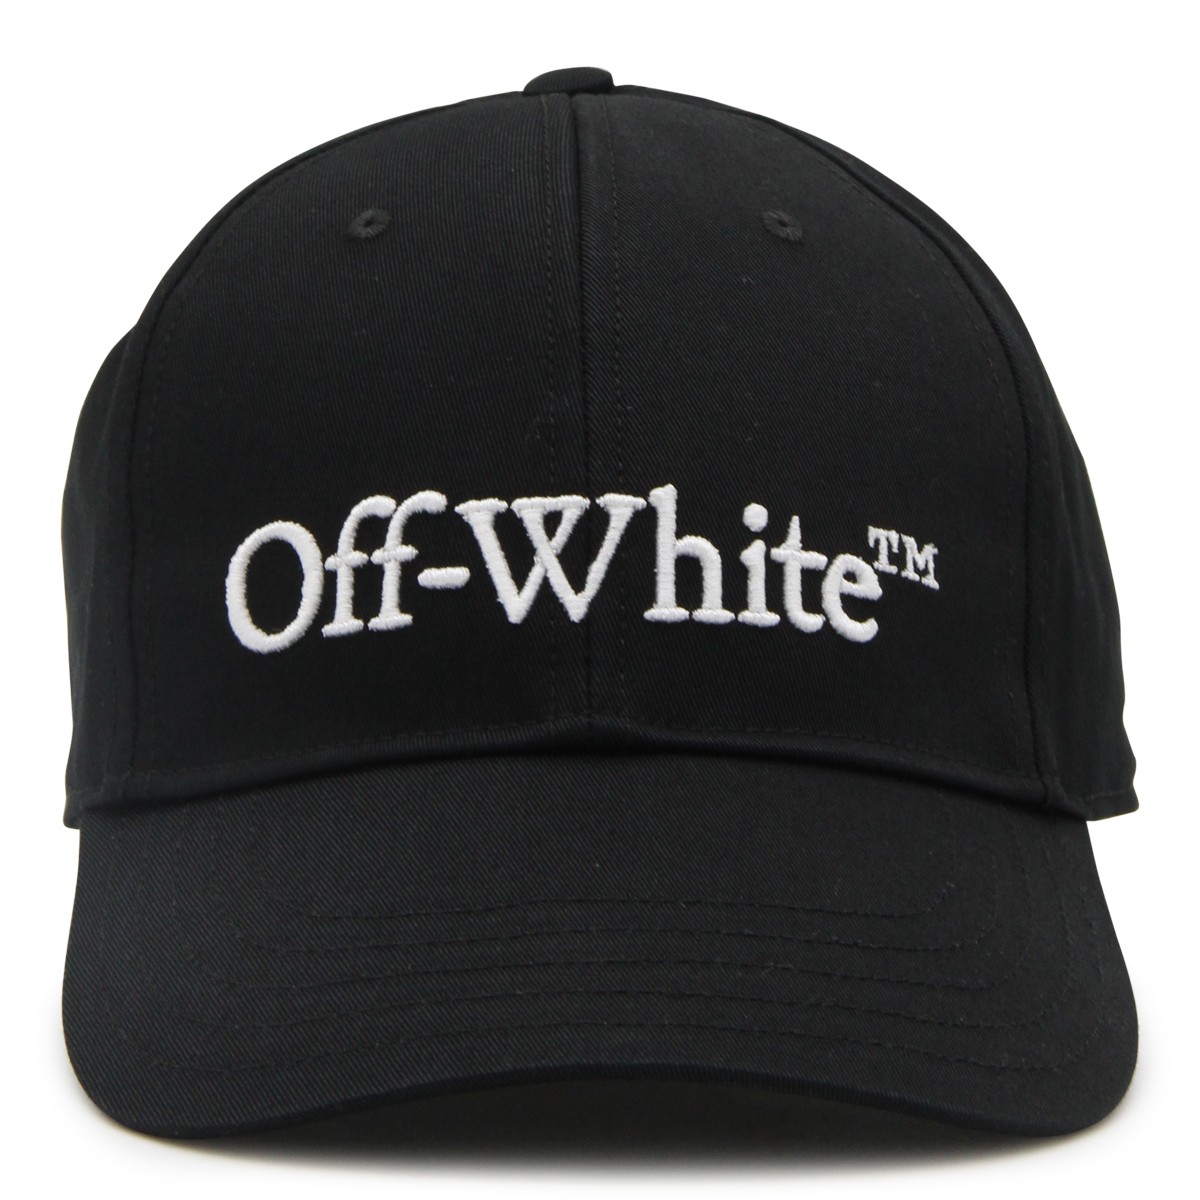 BLACK AND WHITE COTTON LOGO BASEBALL CAP